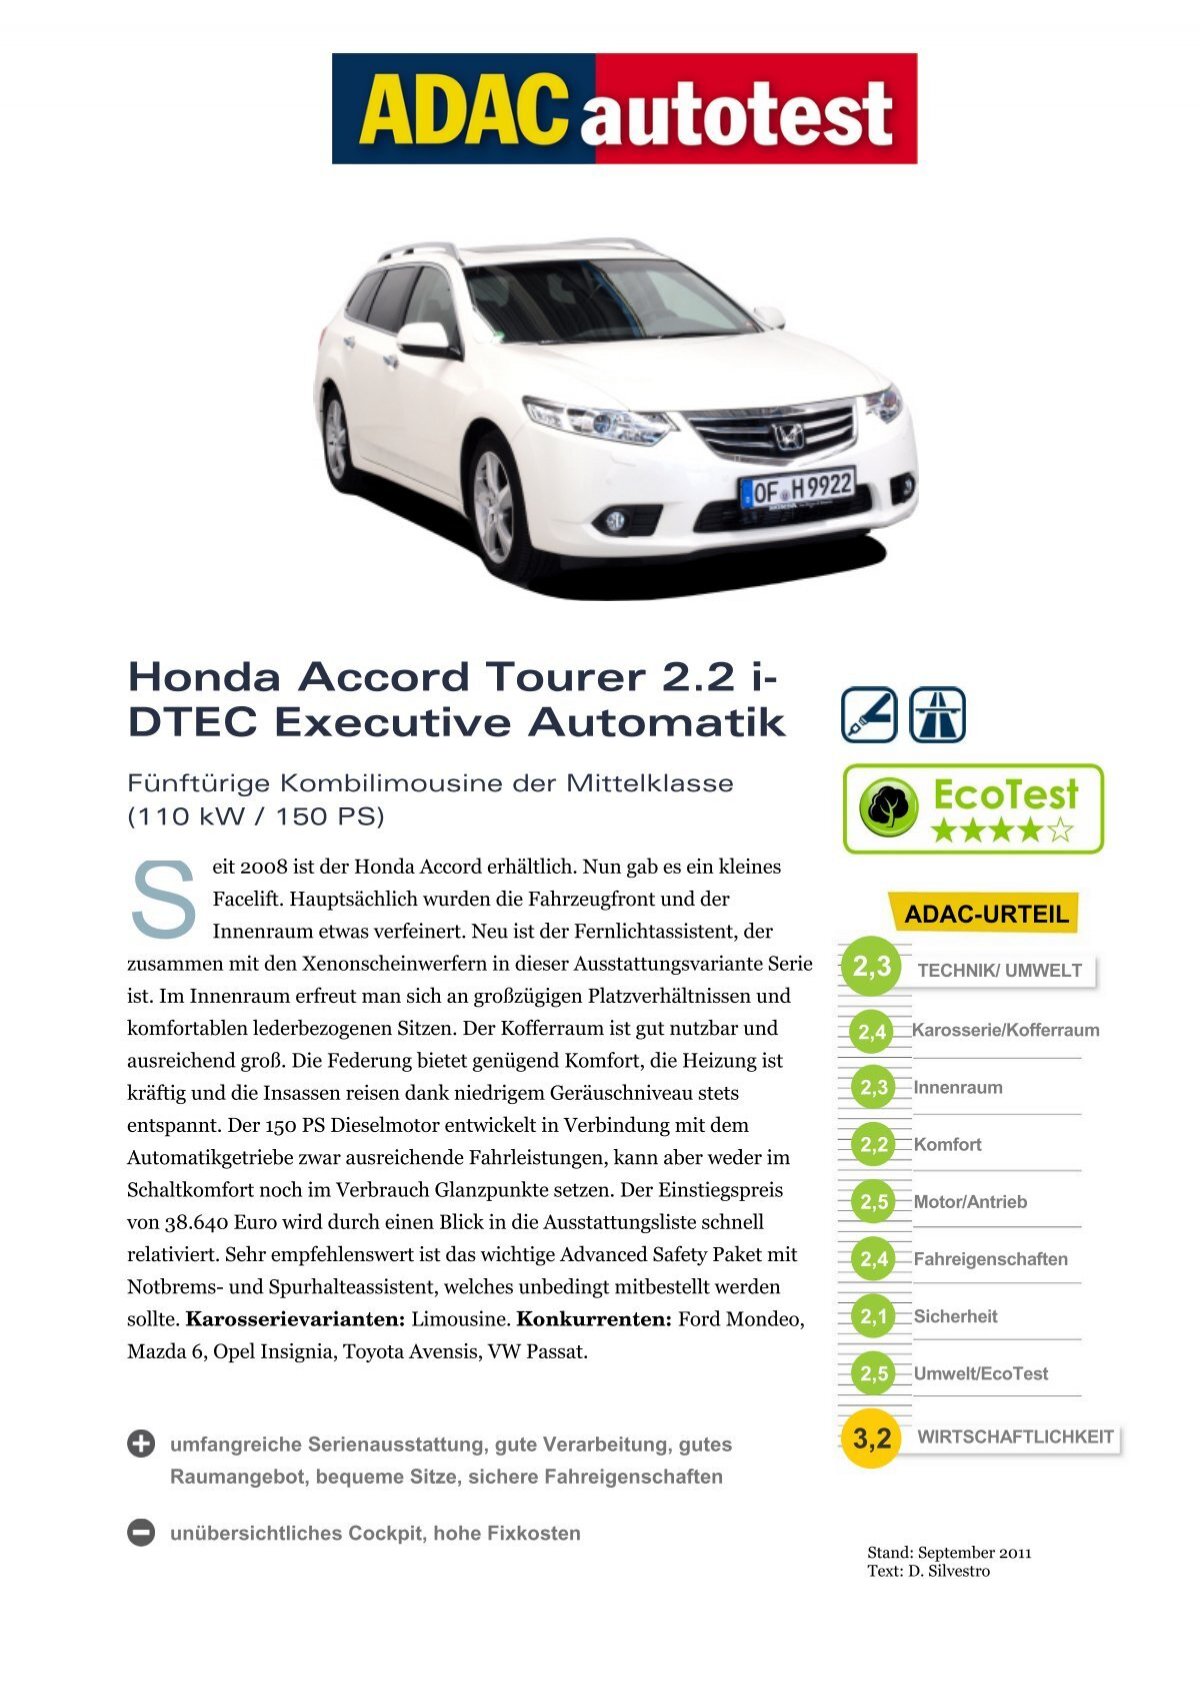 Honda Accord Tourer 2.2 i-DTEC Executive Automatik (DPF) - ADAC